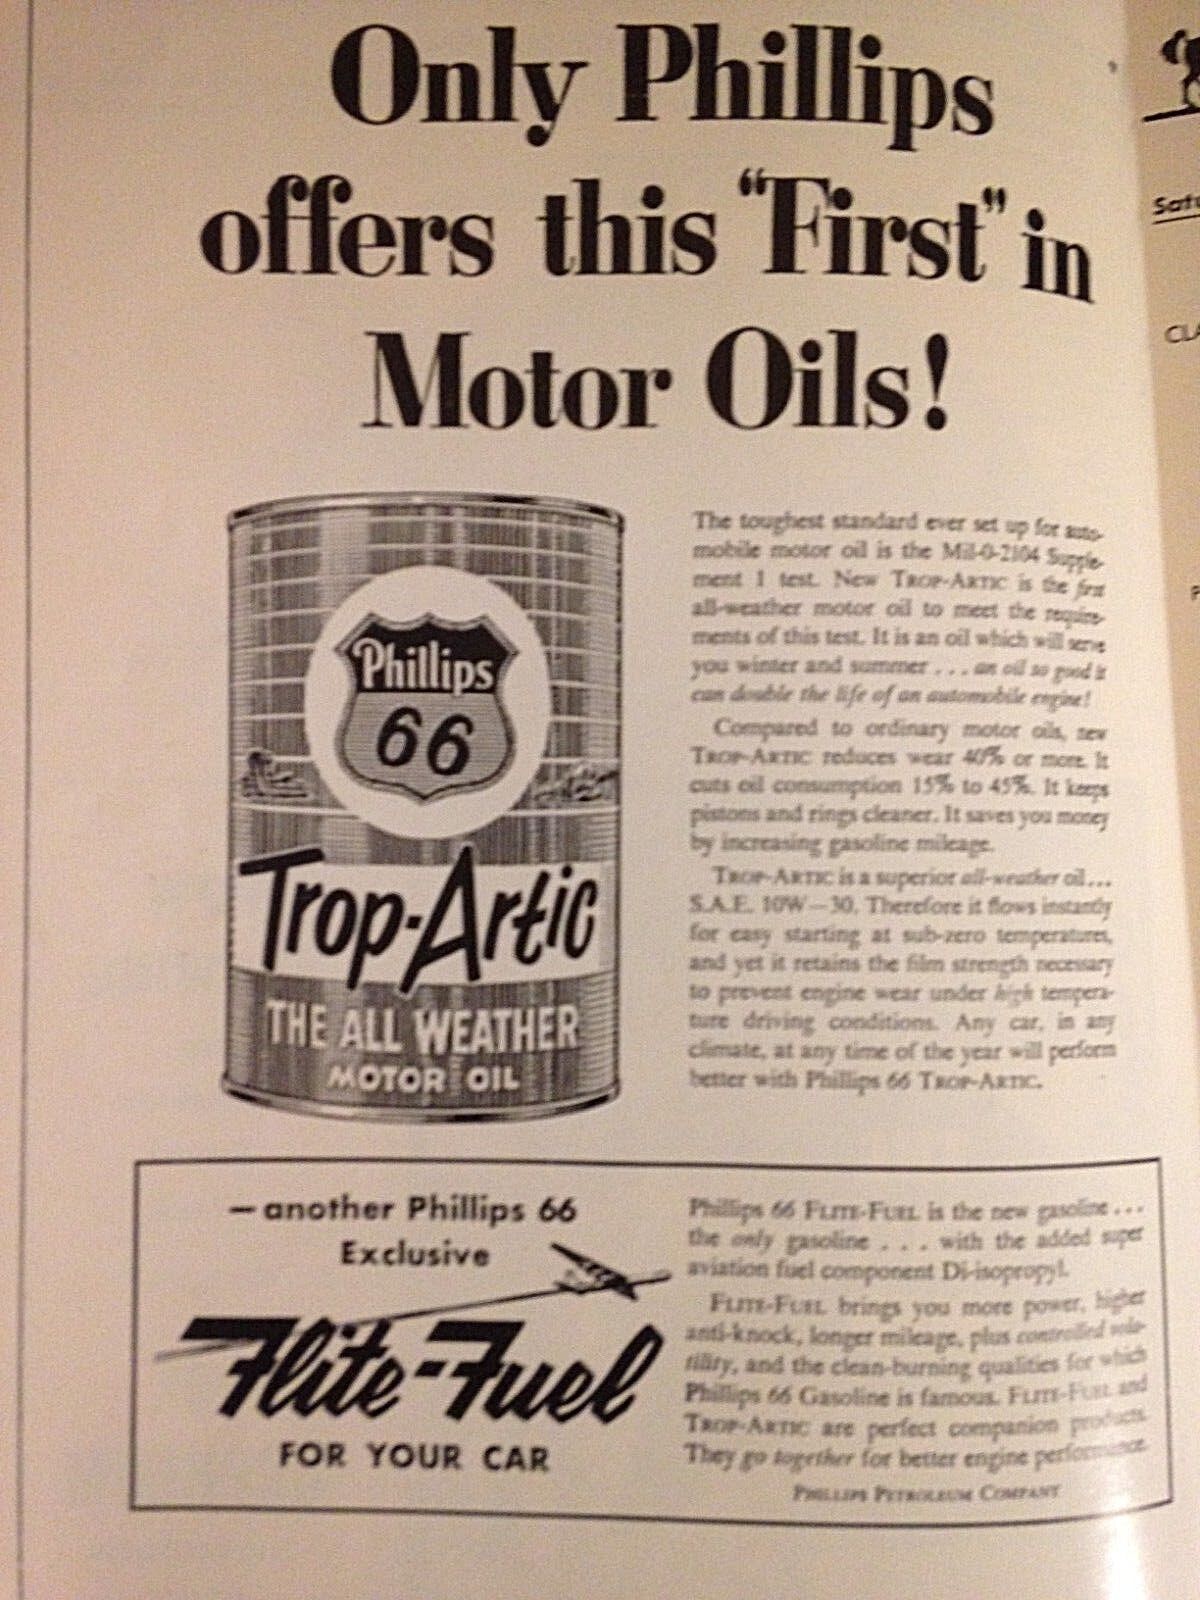 1955 Vtg Magazine Print Ad 8"x11" Phillips 66 Trop-artic Motor Oil All Weather